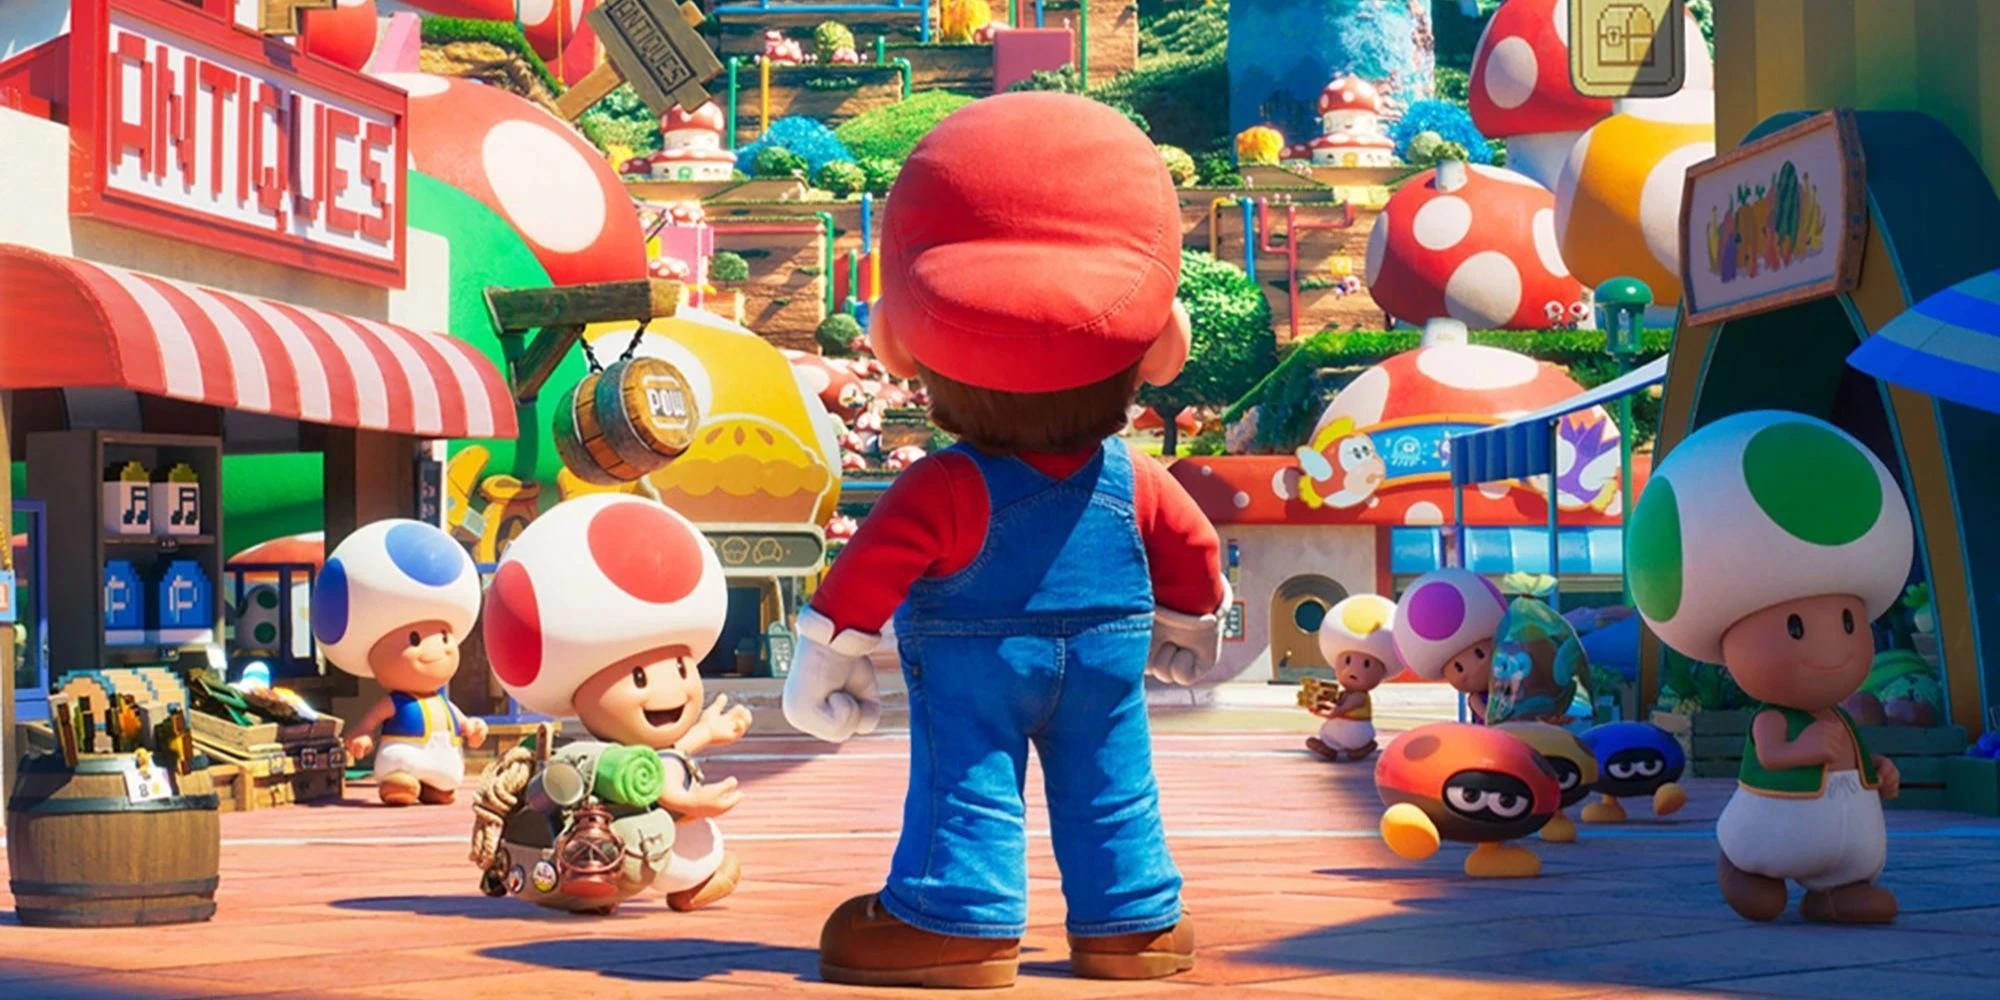 Mario looks up at the Mushroom Kingdom in The Super Mario Bros. Movie